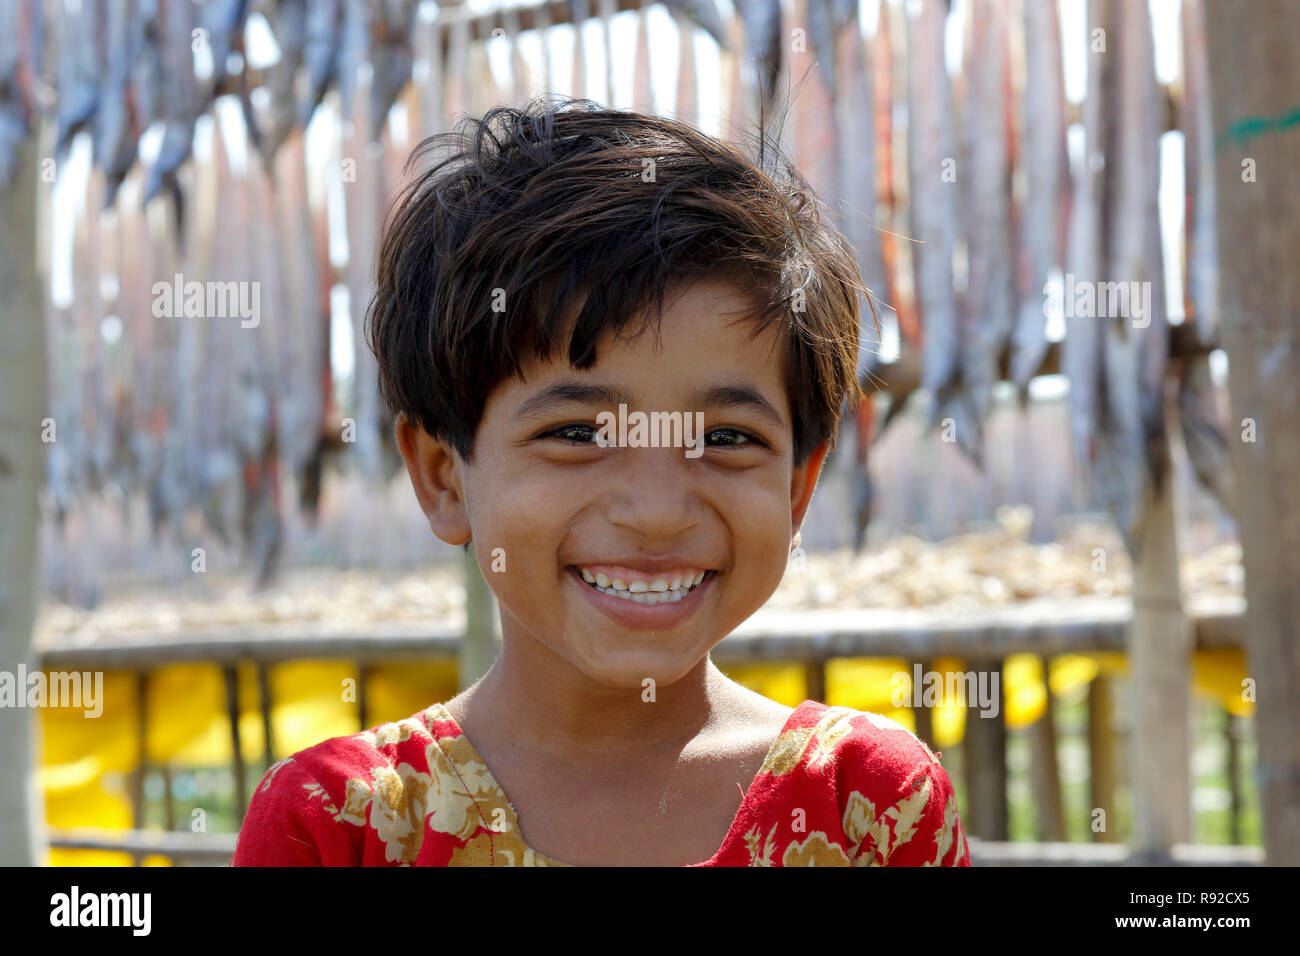 https://c8.alamy.com/comp/R92CX5/portrait-of-a-girl-at-nazirartek-dry-fish-plant-in-coxs-bazar-bangladesh-R92CX5.jpg